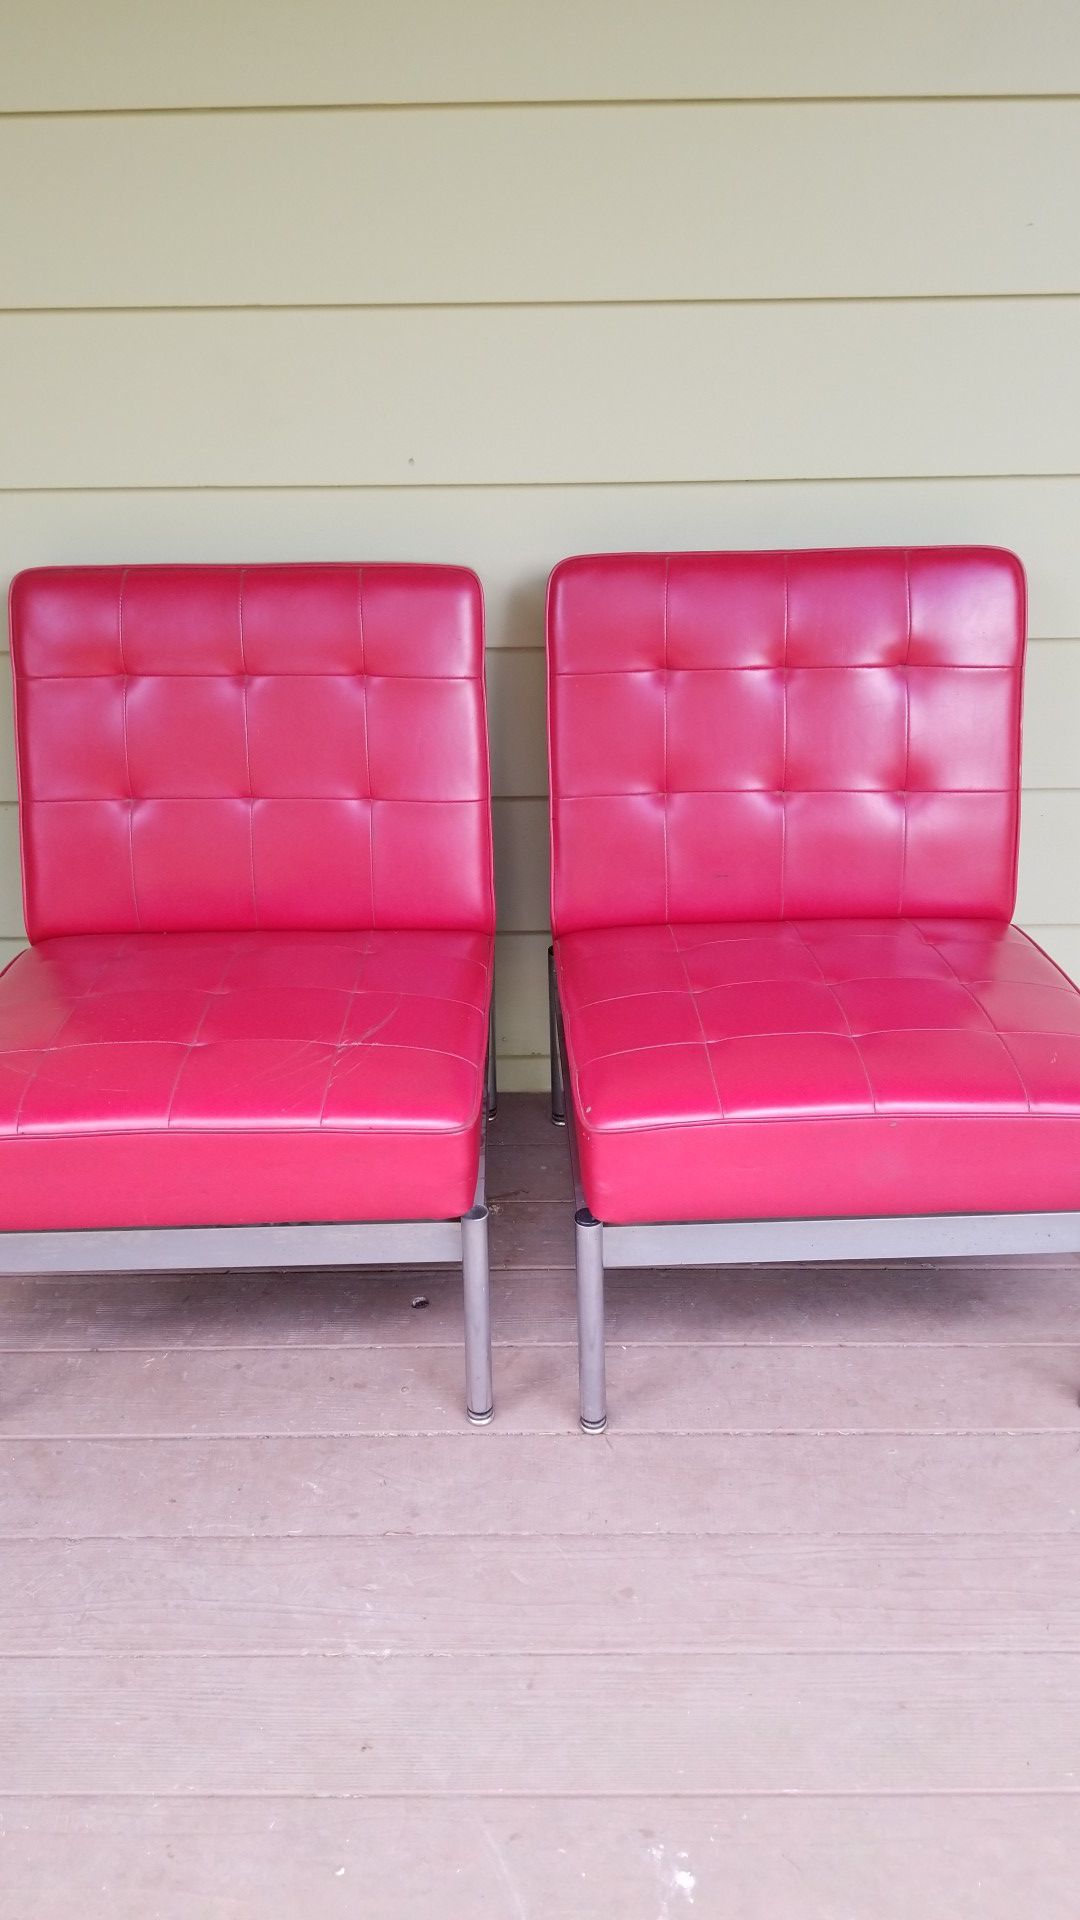 1974 True Vintage Modernist HOWELlL Metal Furniture 2 Chairs